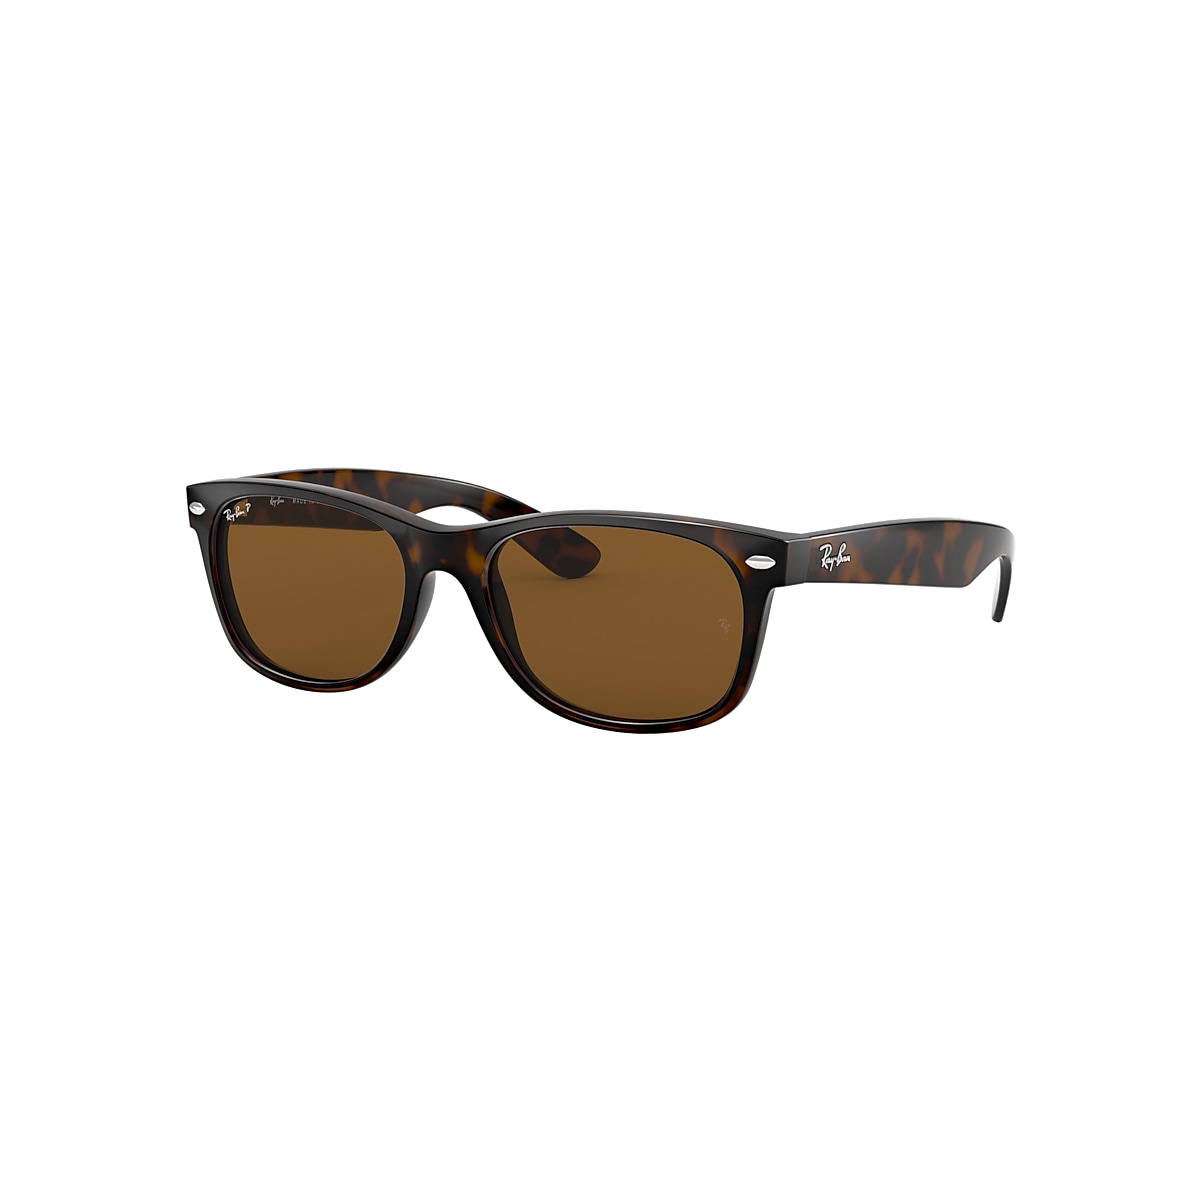 New Wayfarer Classic Sunglasses in Tortoise and Brown | Ray-Ban®